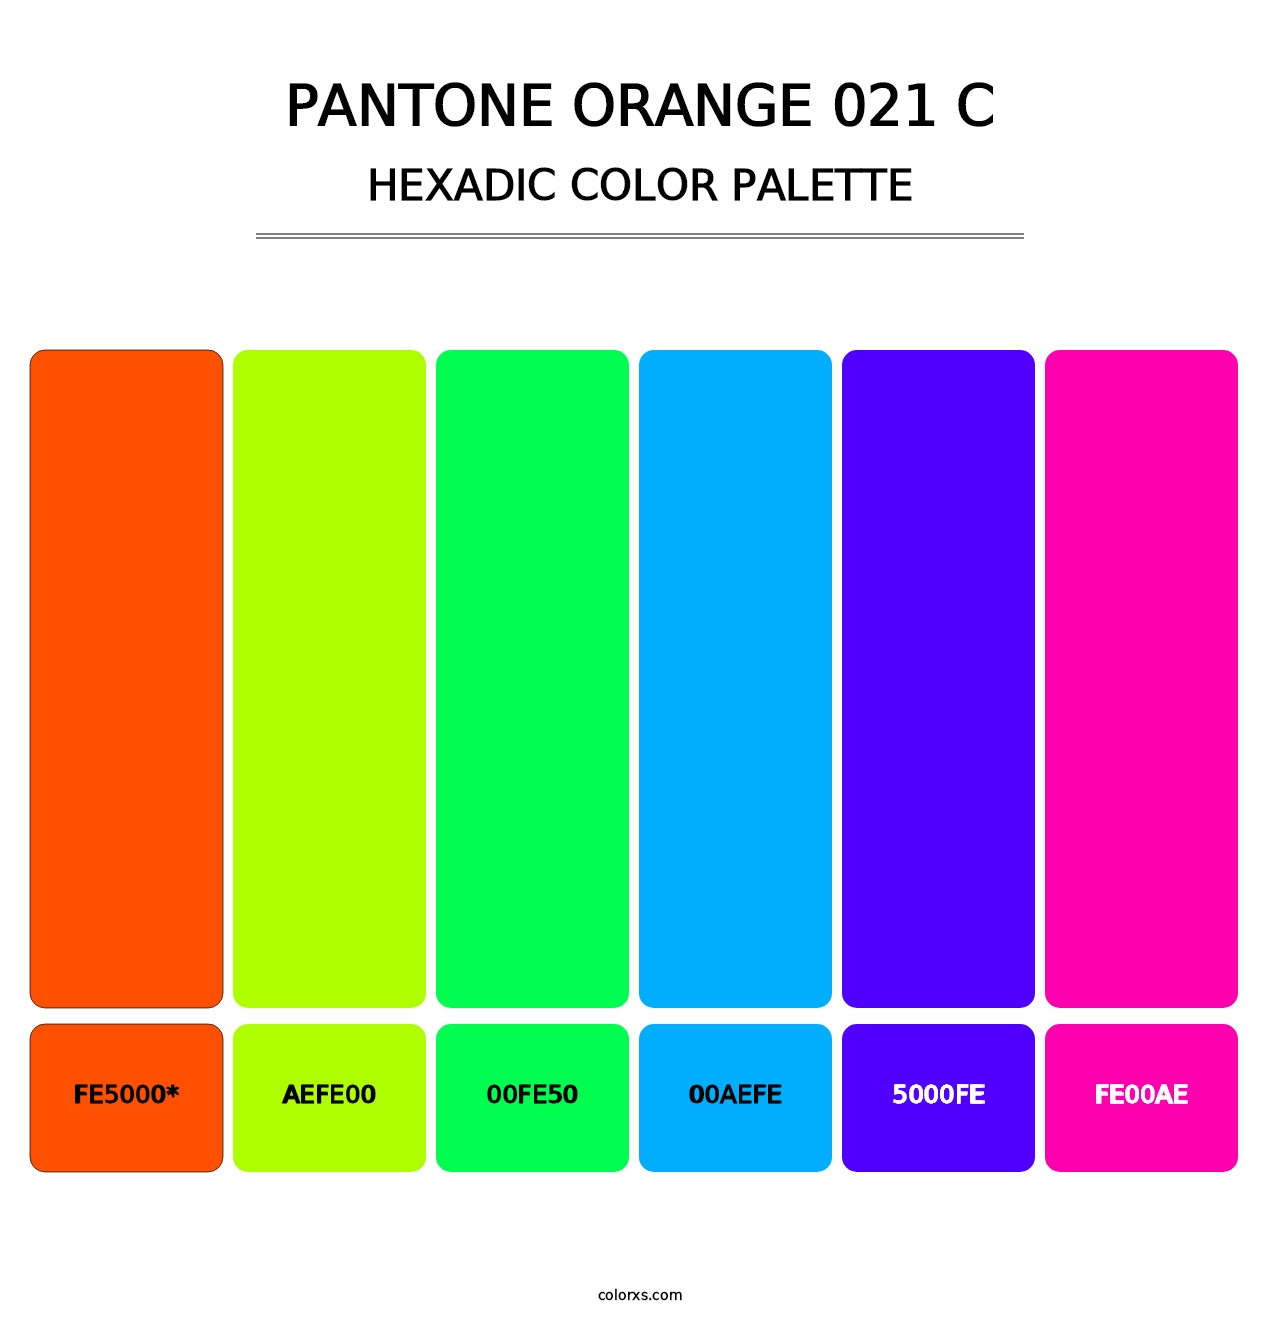 PANTONE Orange 021 C - Hexadic Color Palette